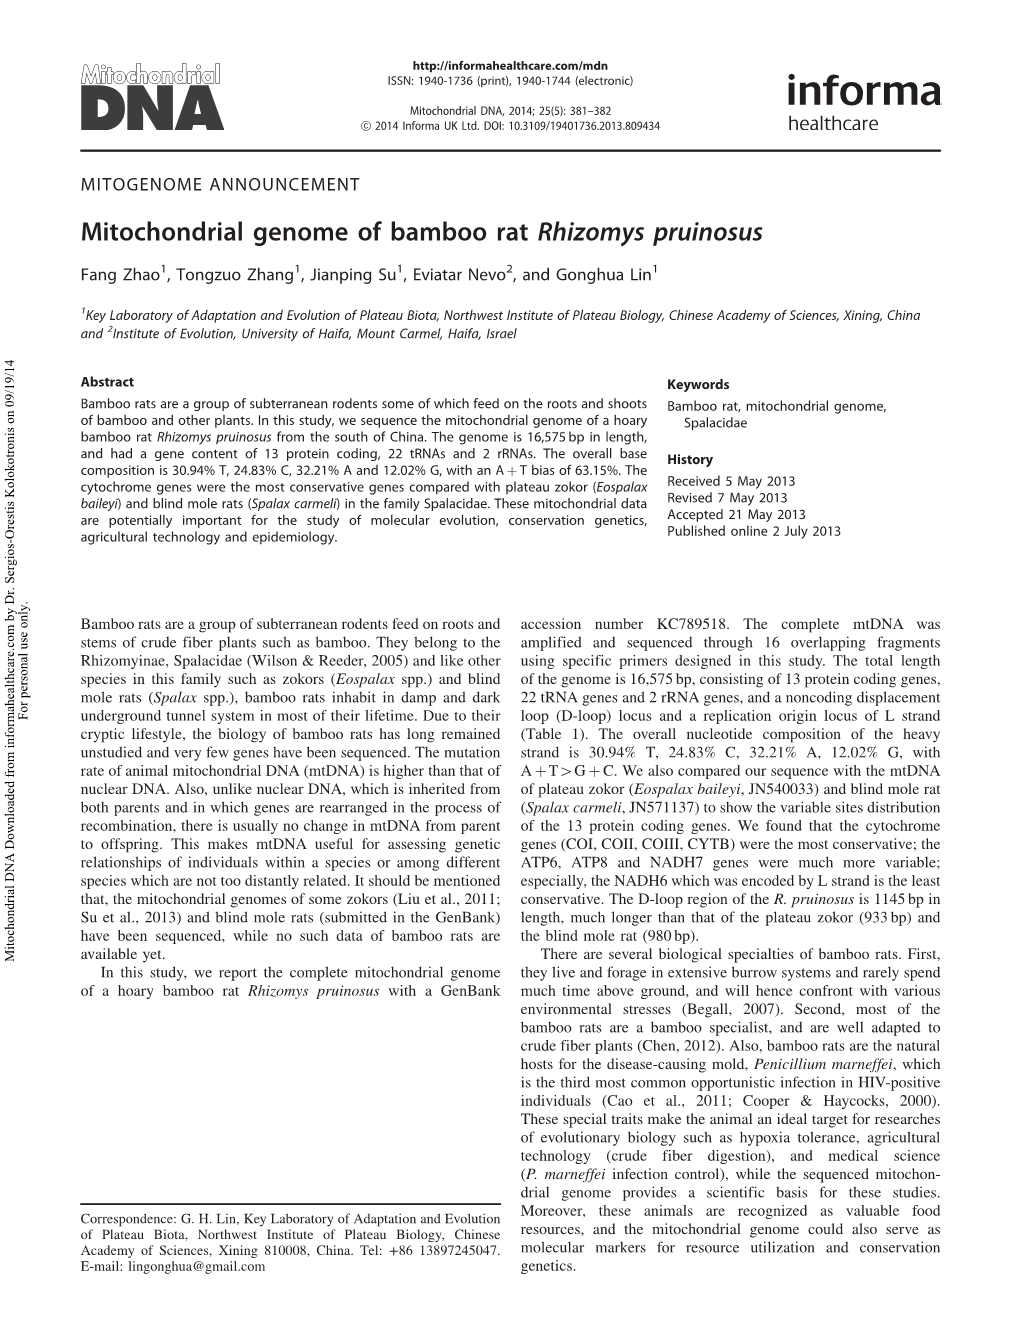 Mitochondrial Genome of Bamboo Rat Rhizomys Pruinosus